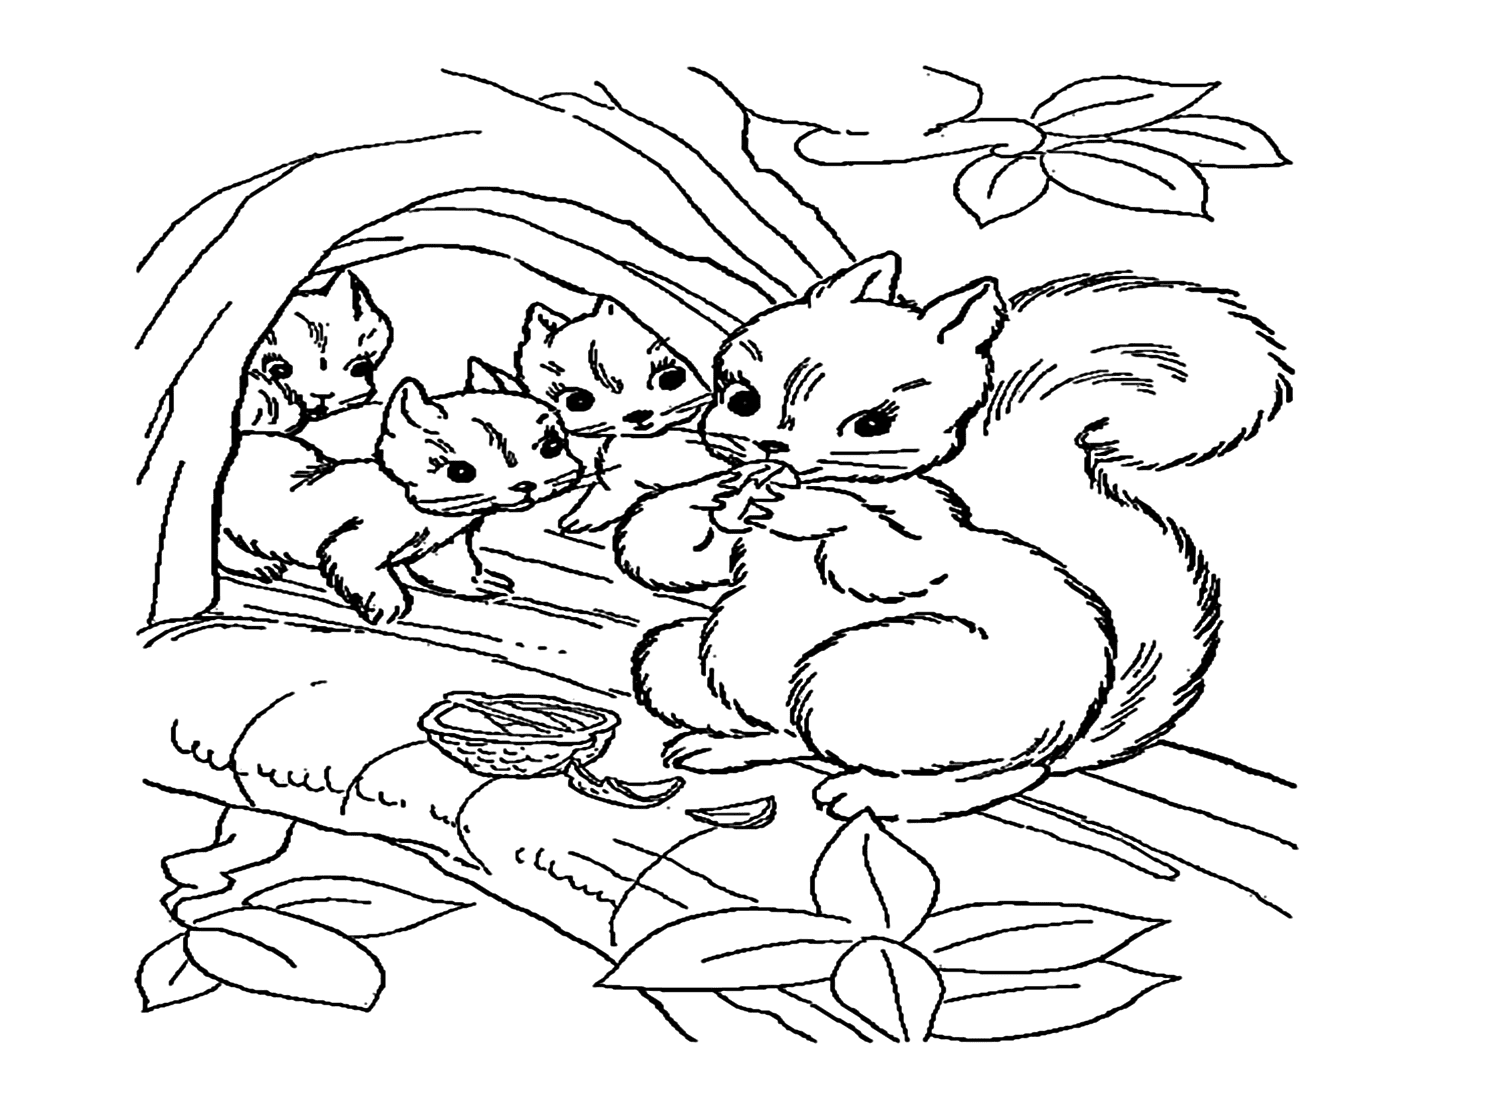 Familia de ardillas listadas de Chipmunk